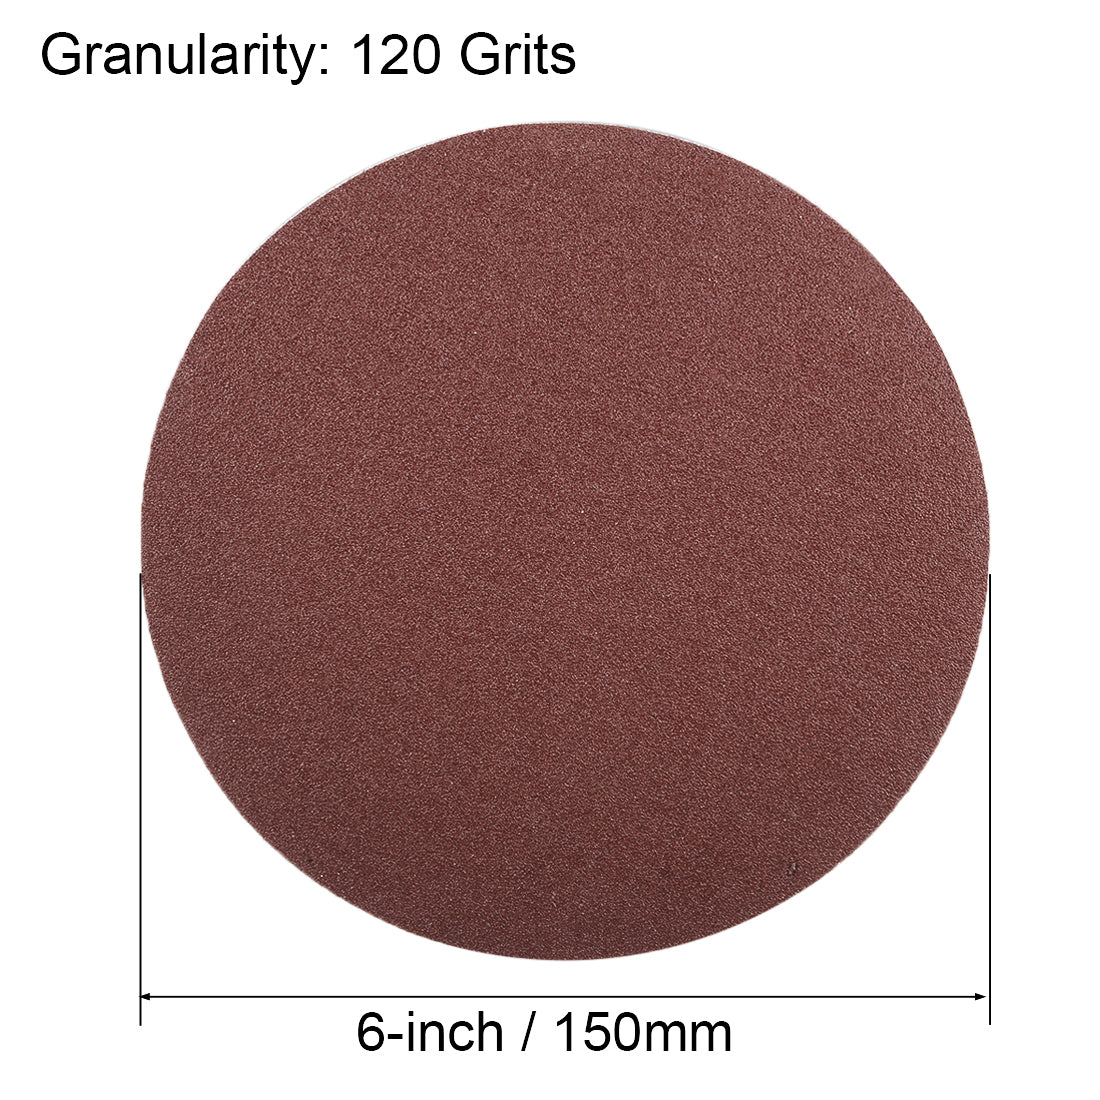 uxcell Uxcell 6-inch 120-Grits PSA Sanding Disc, Adhesive-Backed Sanding Sheets Aluminum Oxide Sandpaper for Random Orbital Sander 5pcs